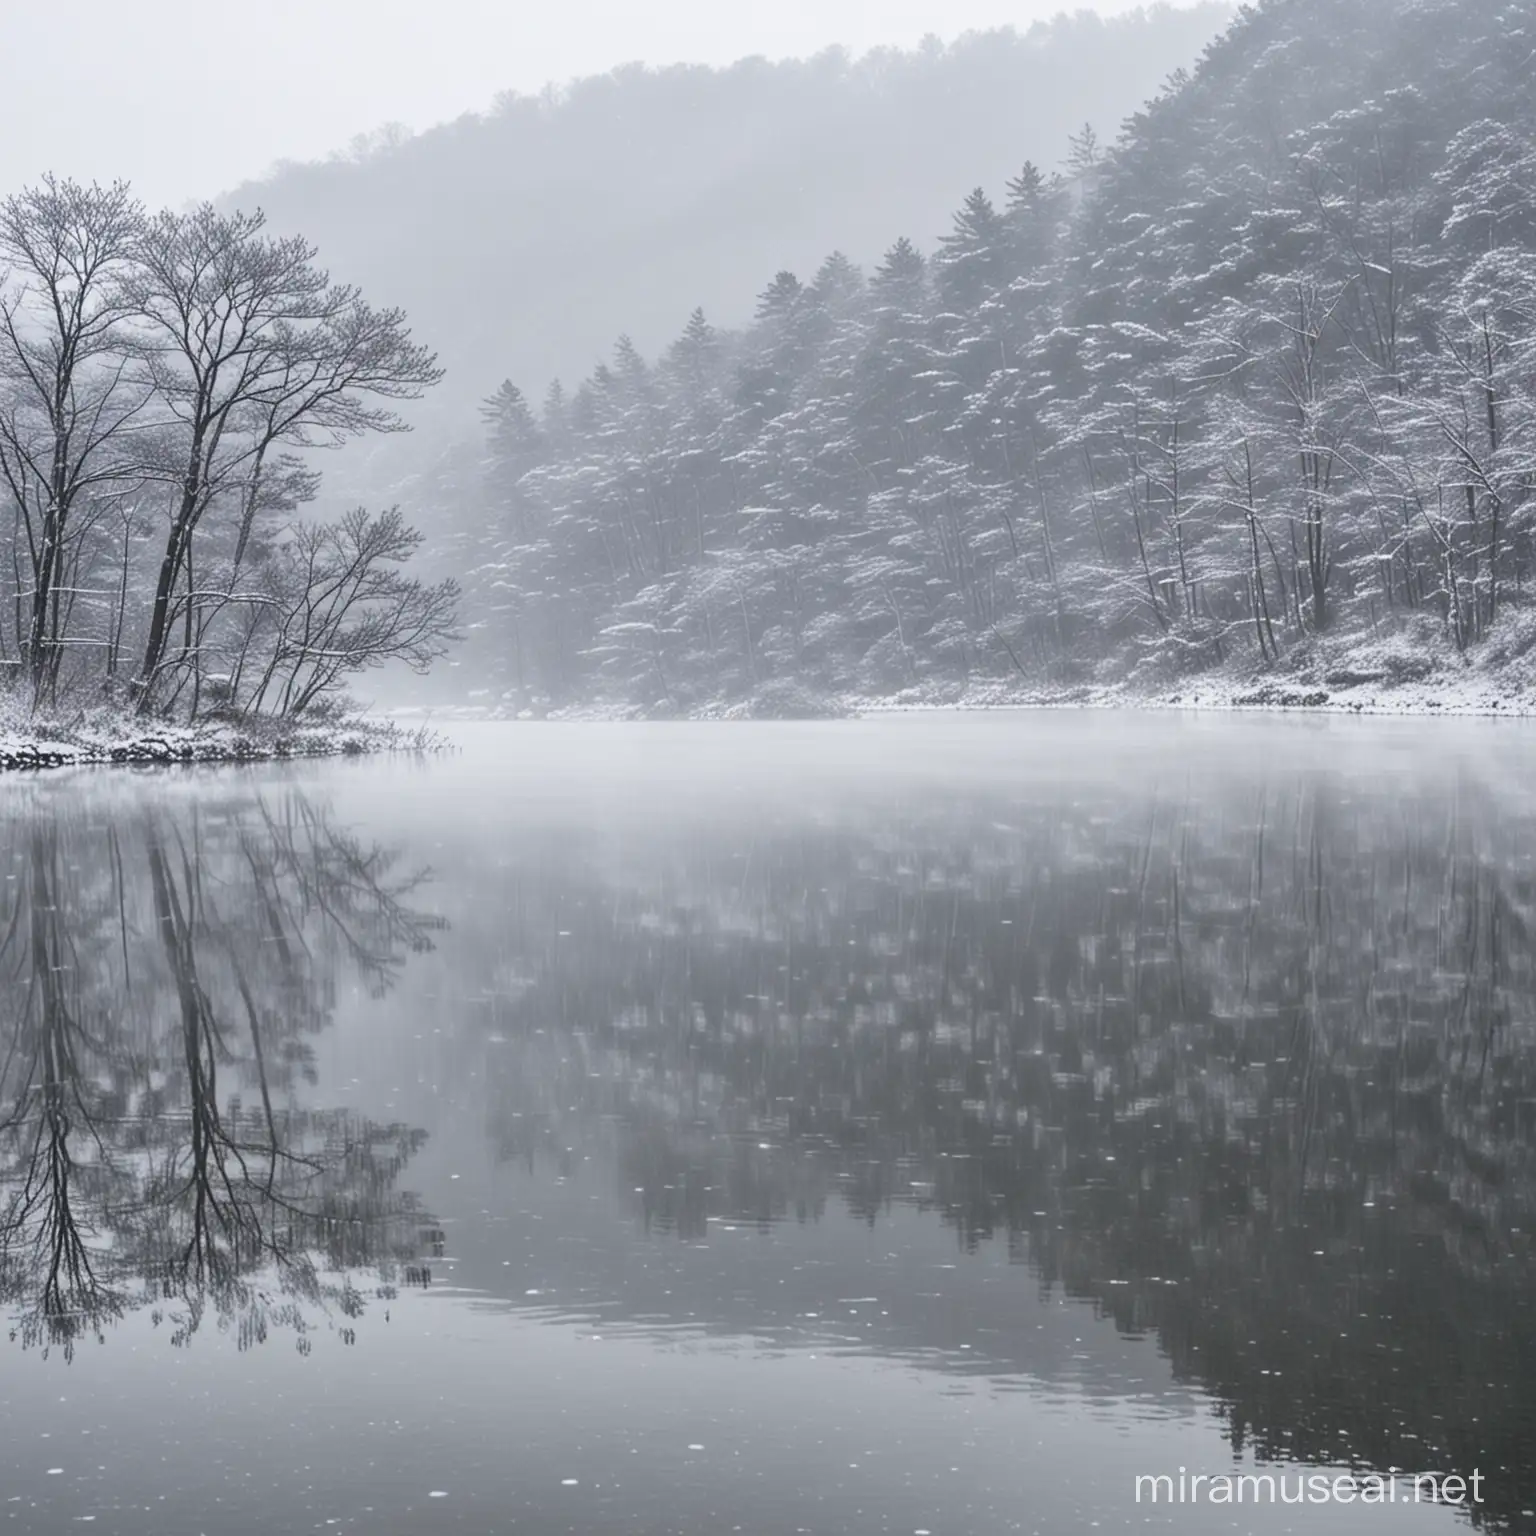 A serene and misty morning snowing scene at Hibara Lake in Yama-gun, Fukushima, Japan., photo